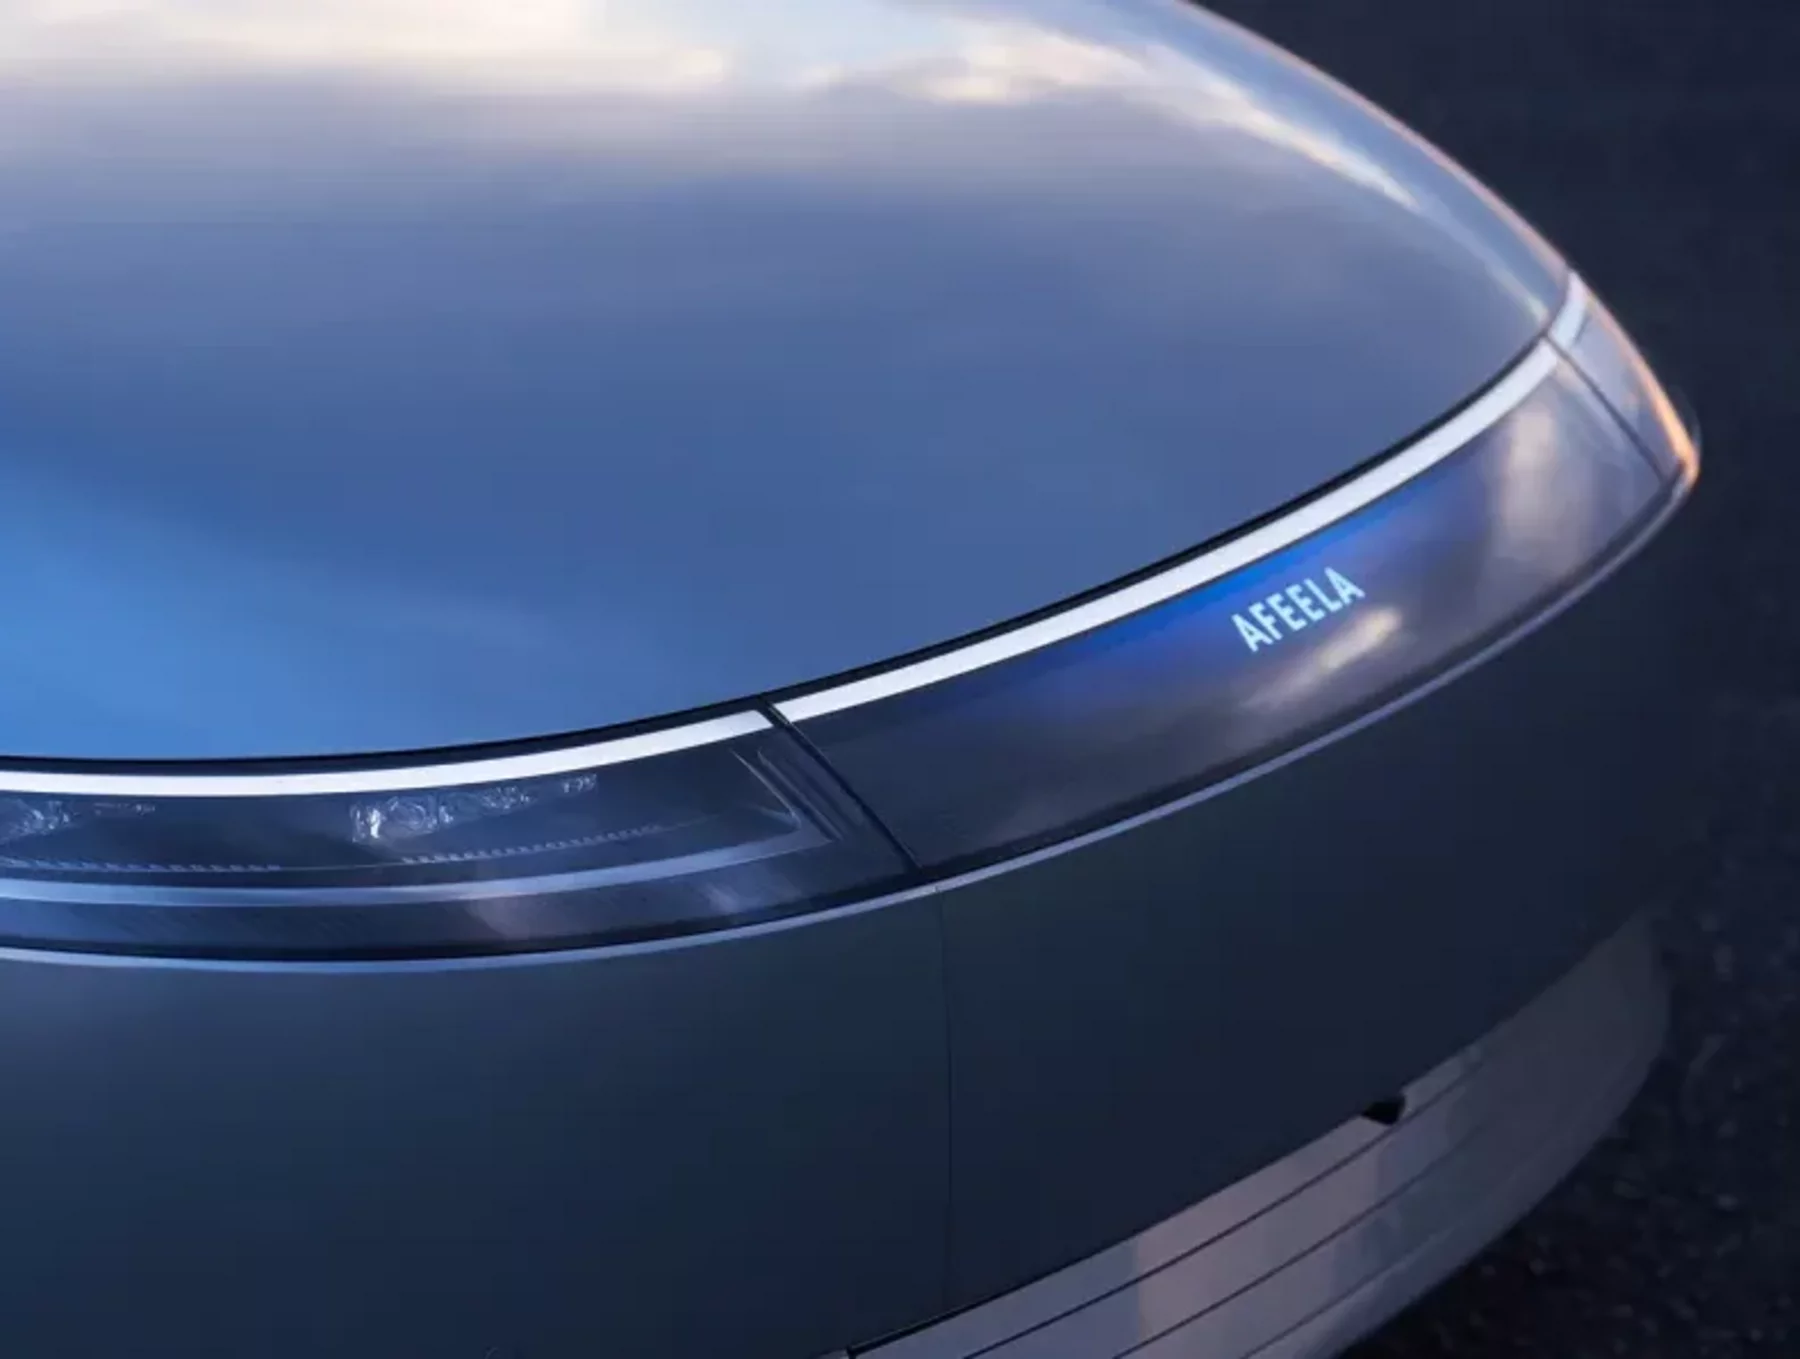 Sony will enter the autonomous electric vehicle market